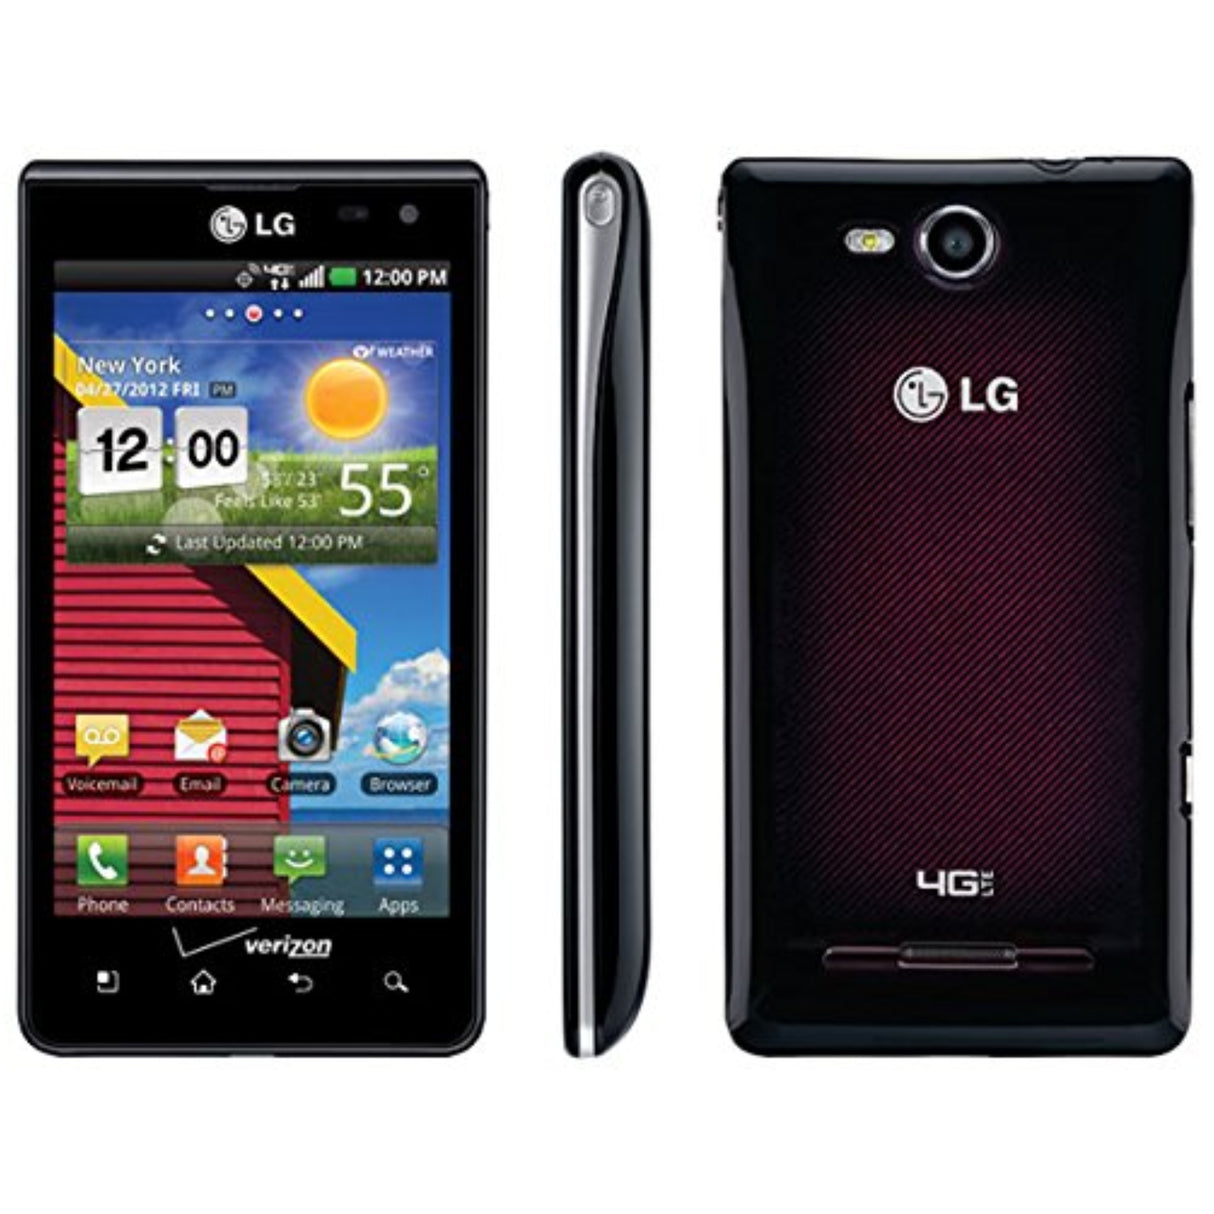 LG Lucid VS840 - 8 GB - Black - Verizon - CDMA